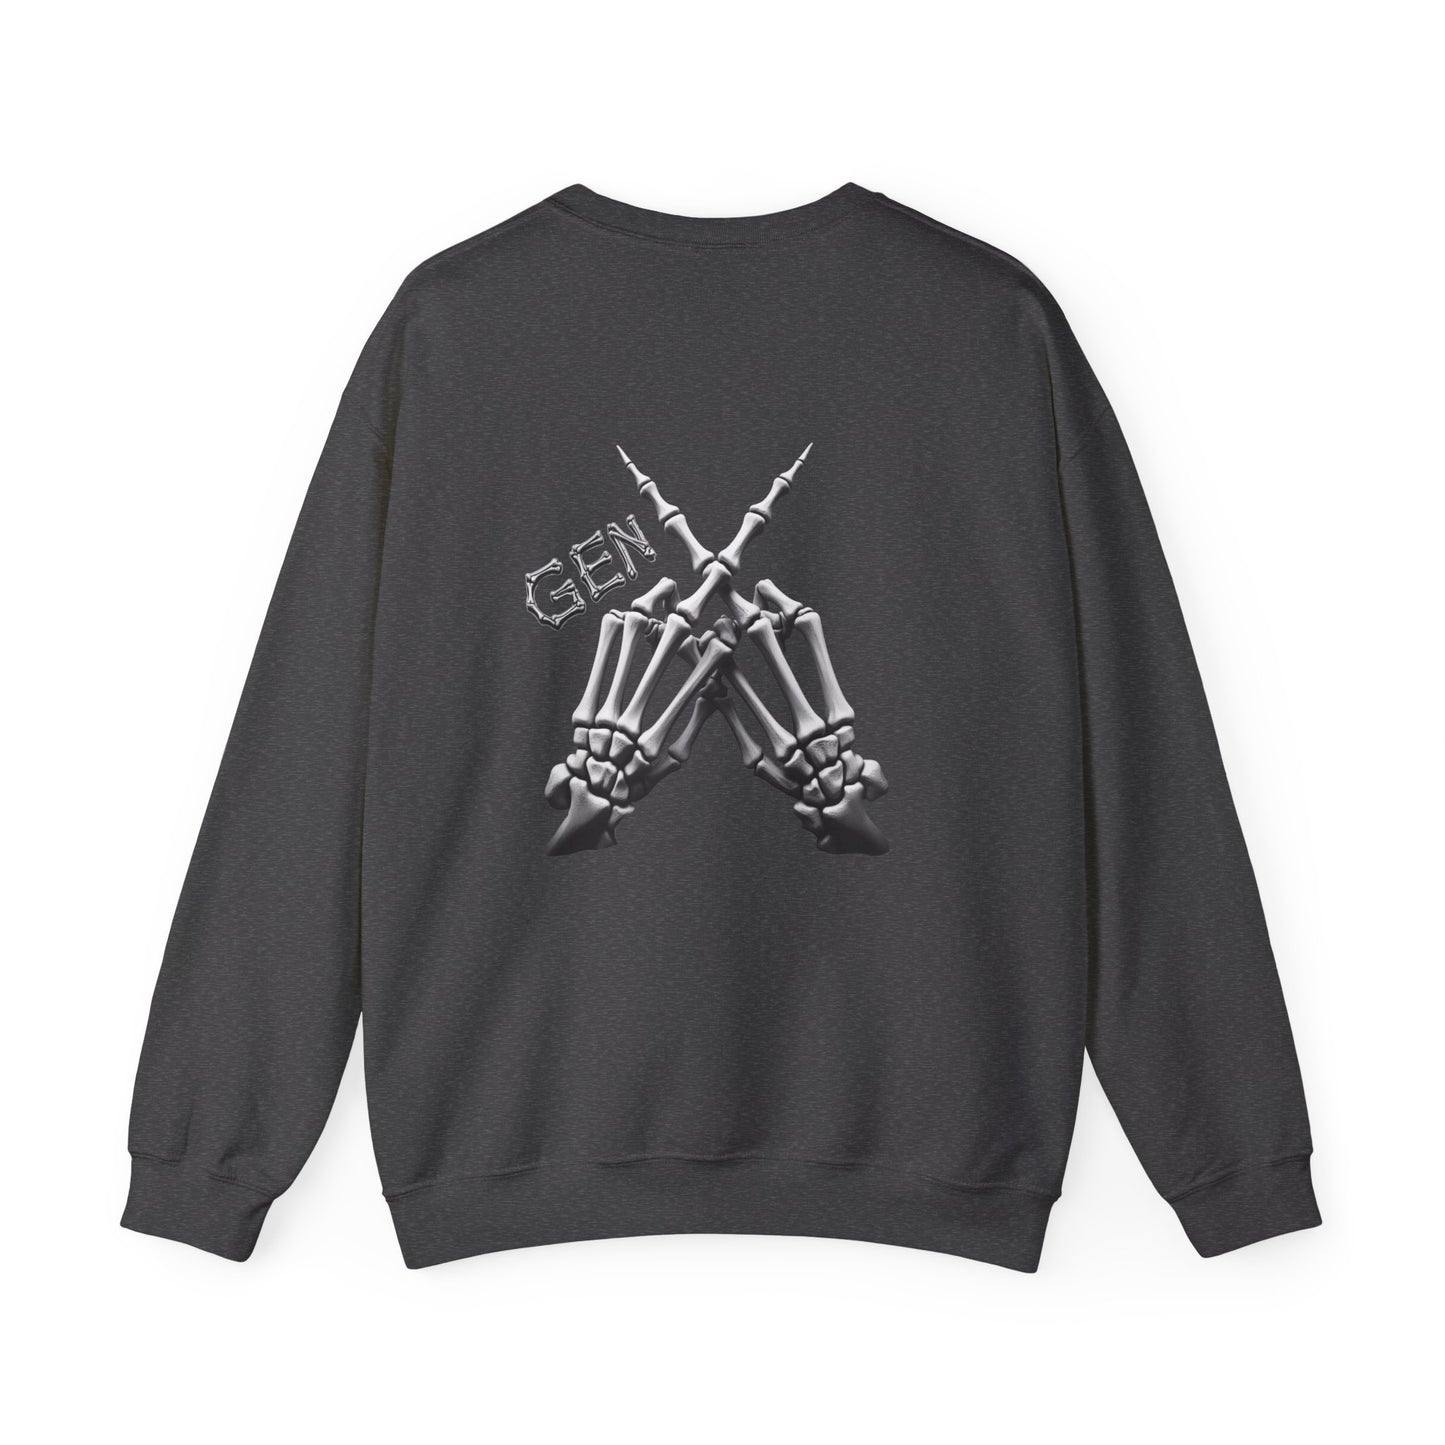 Gen X Sweatshirt Club Generation X Xer Gift